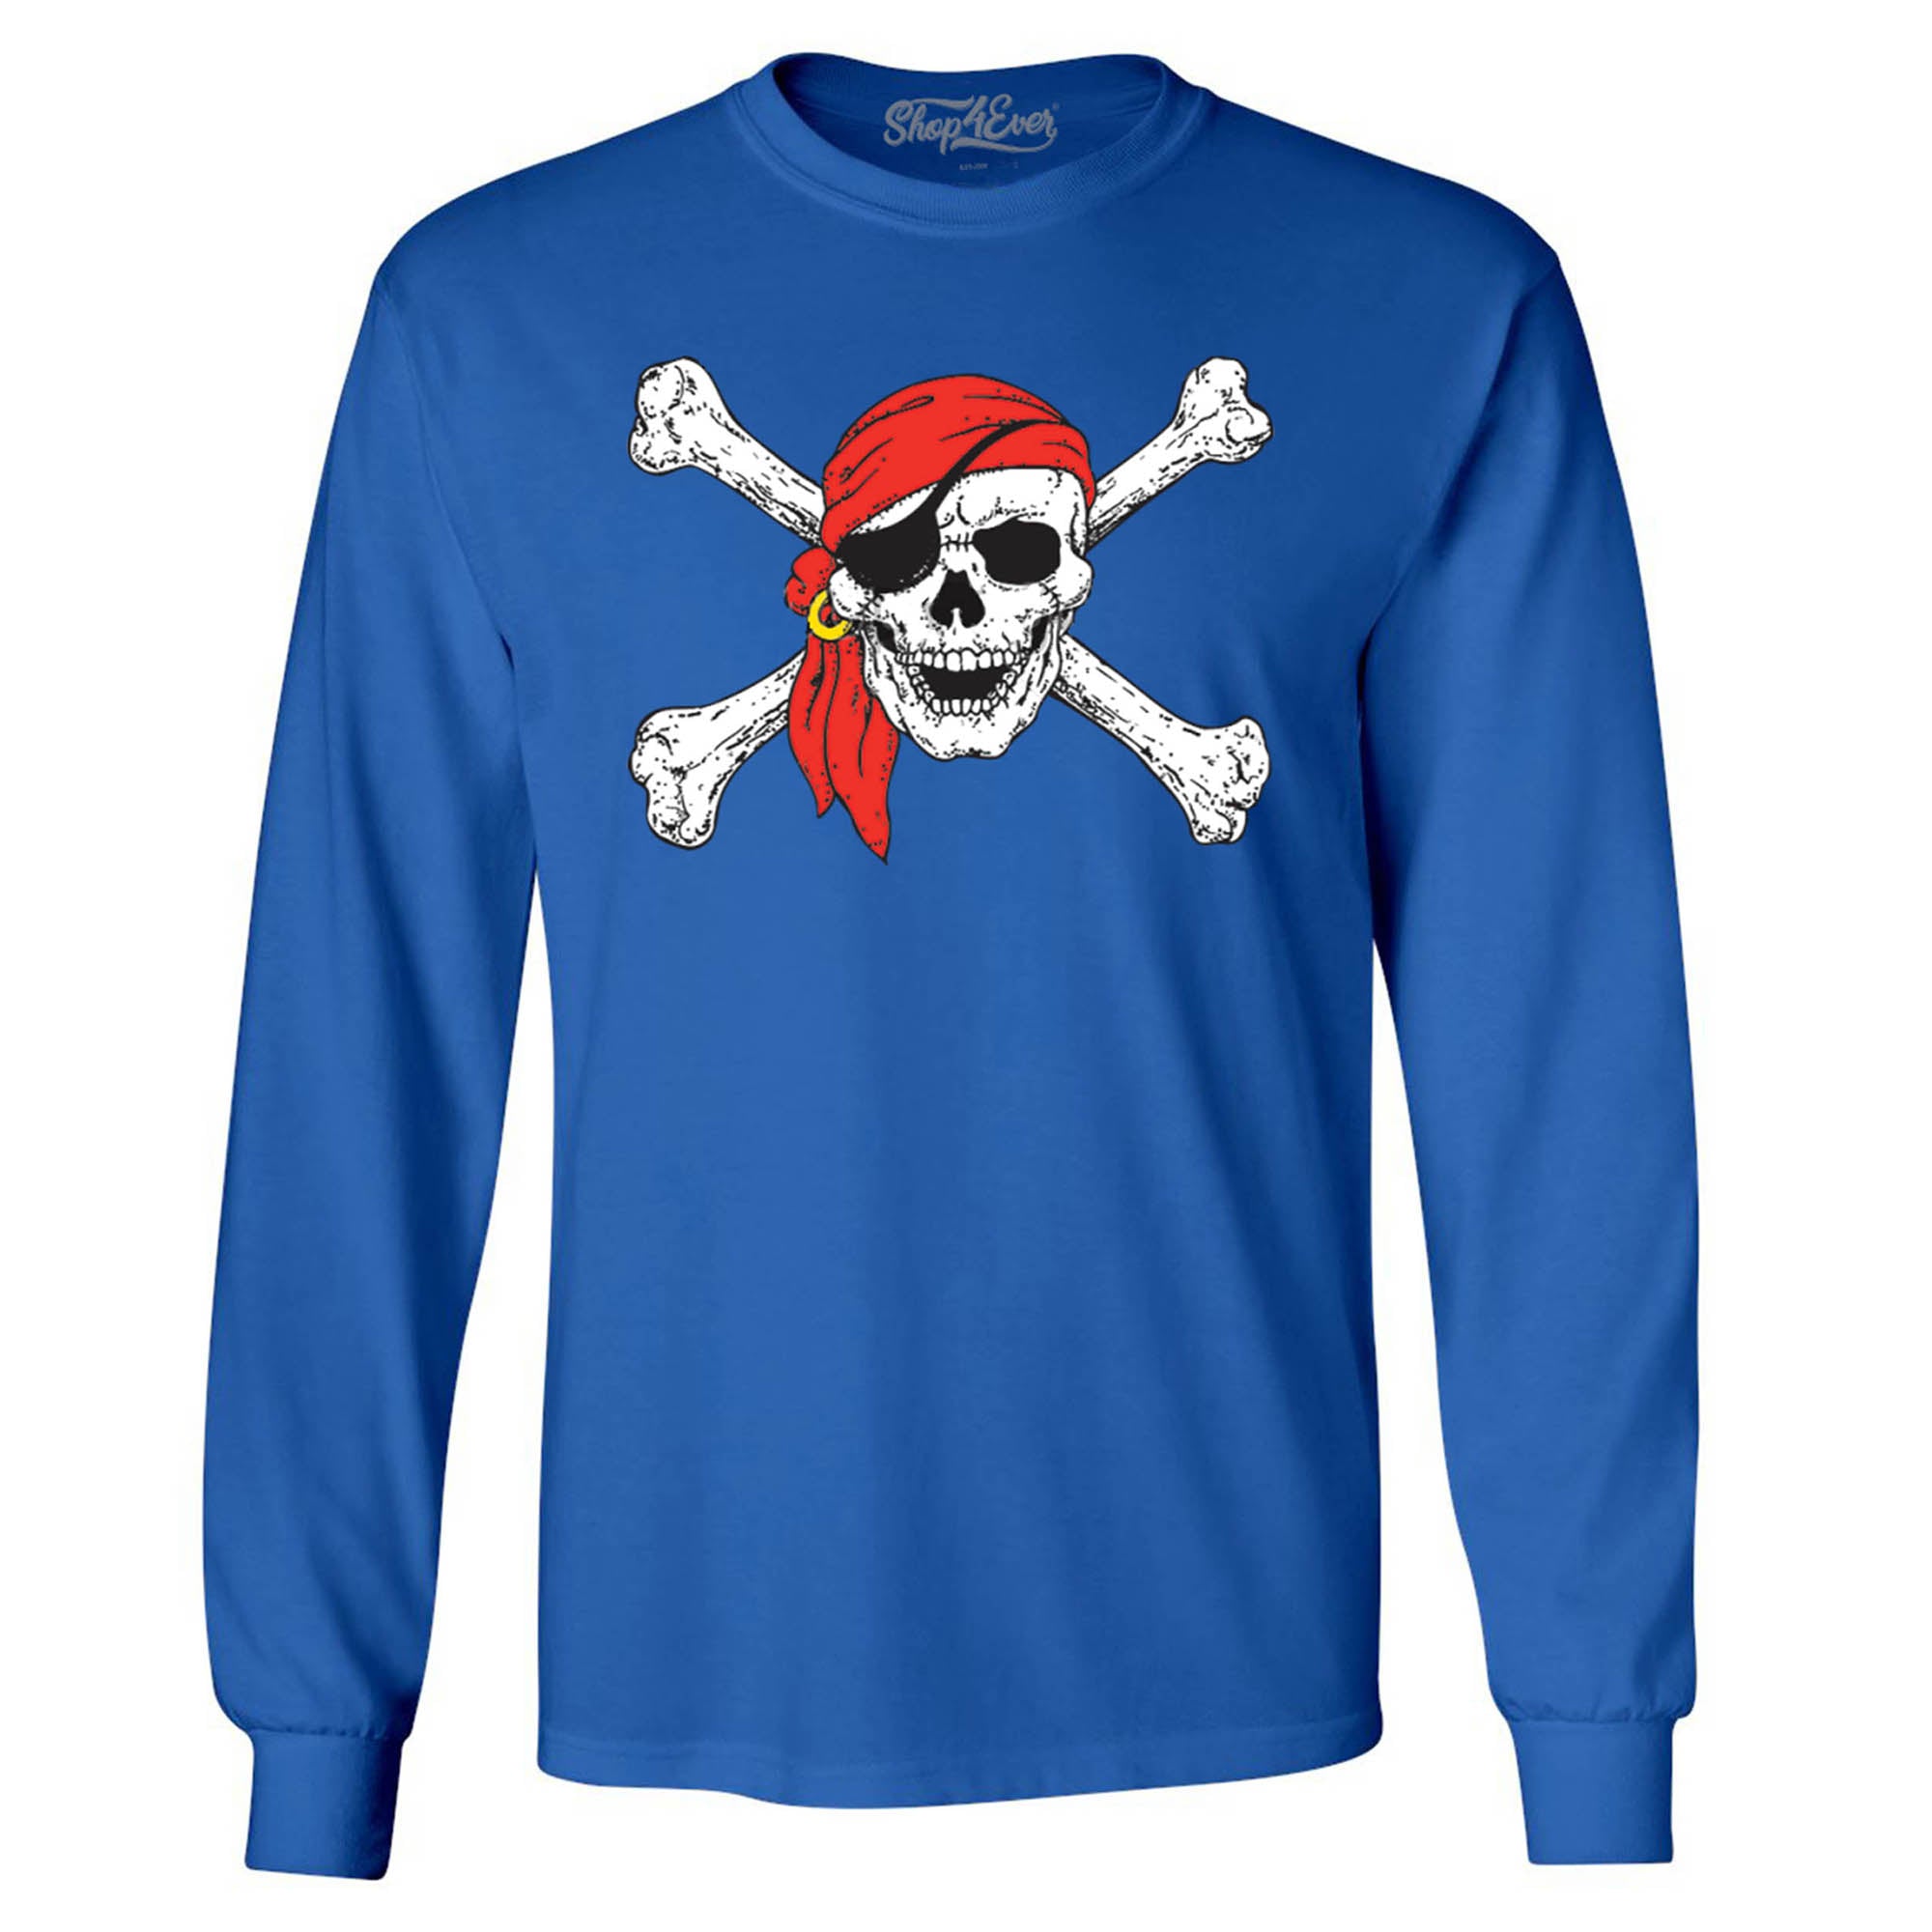 Pirate Skull and Crossbones Long Sleeve Shirt Pirate Flag Shirts